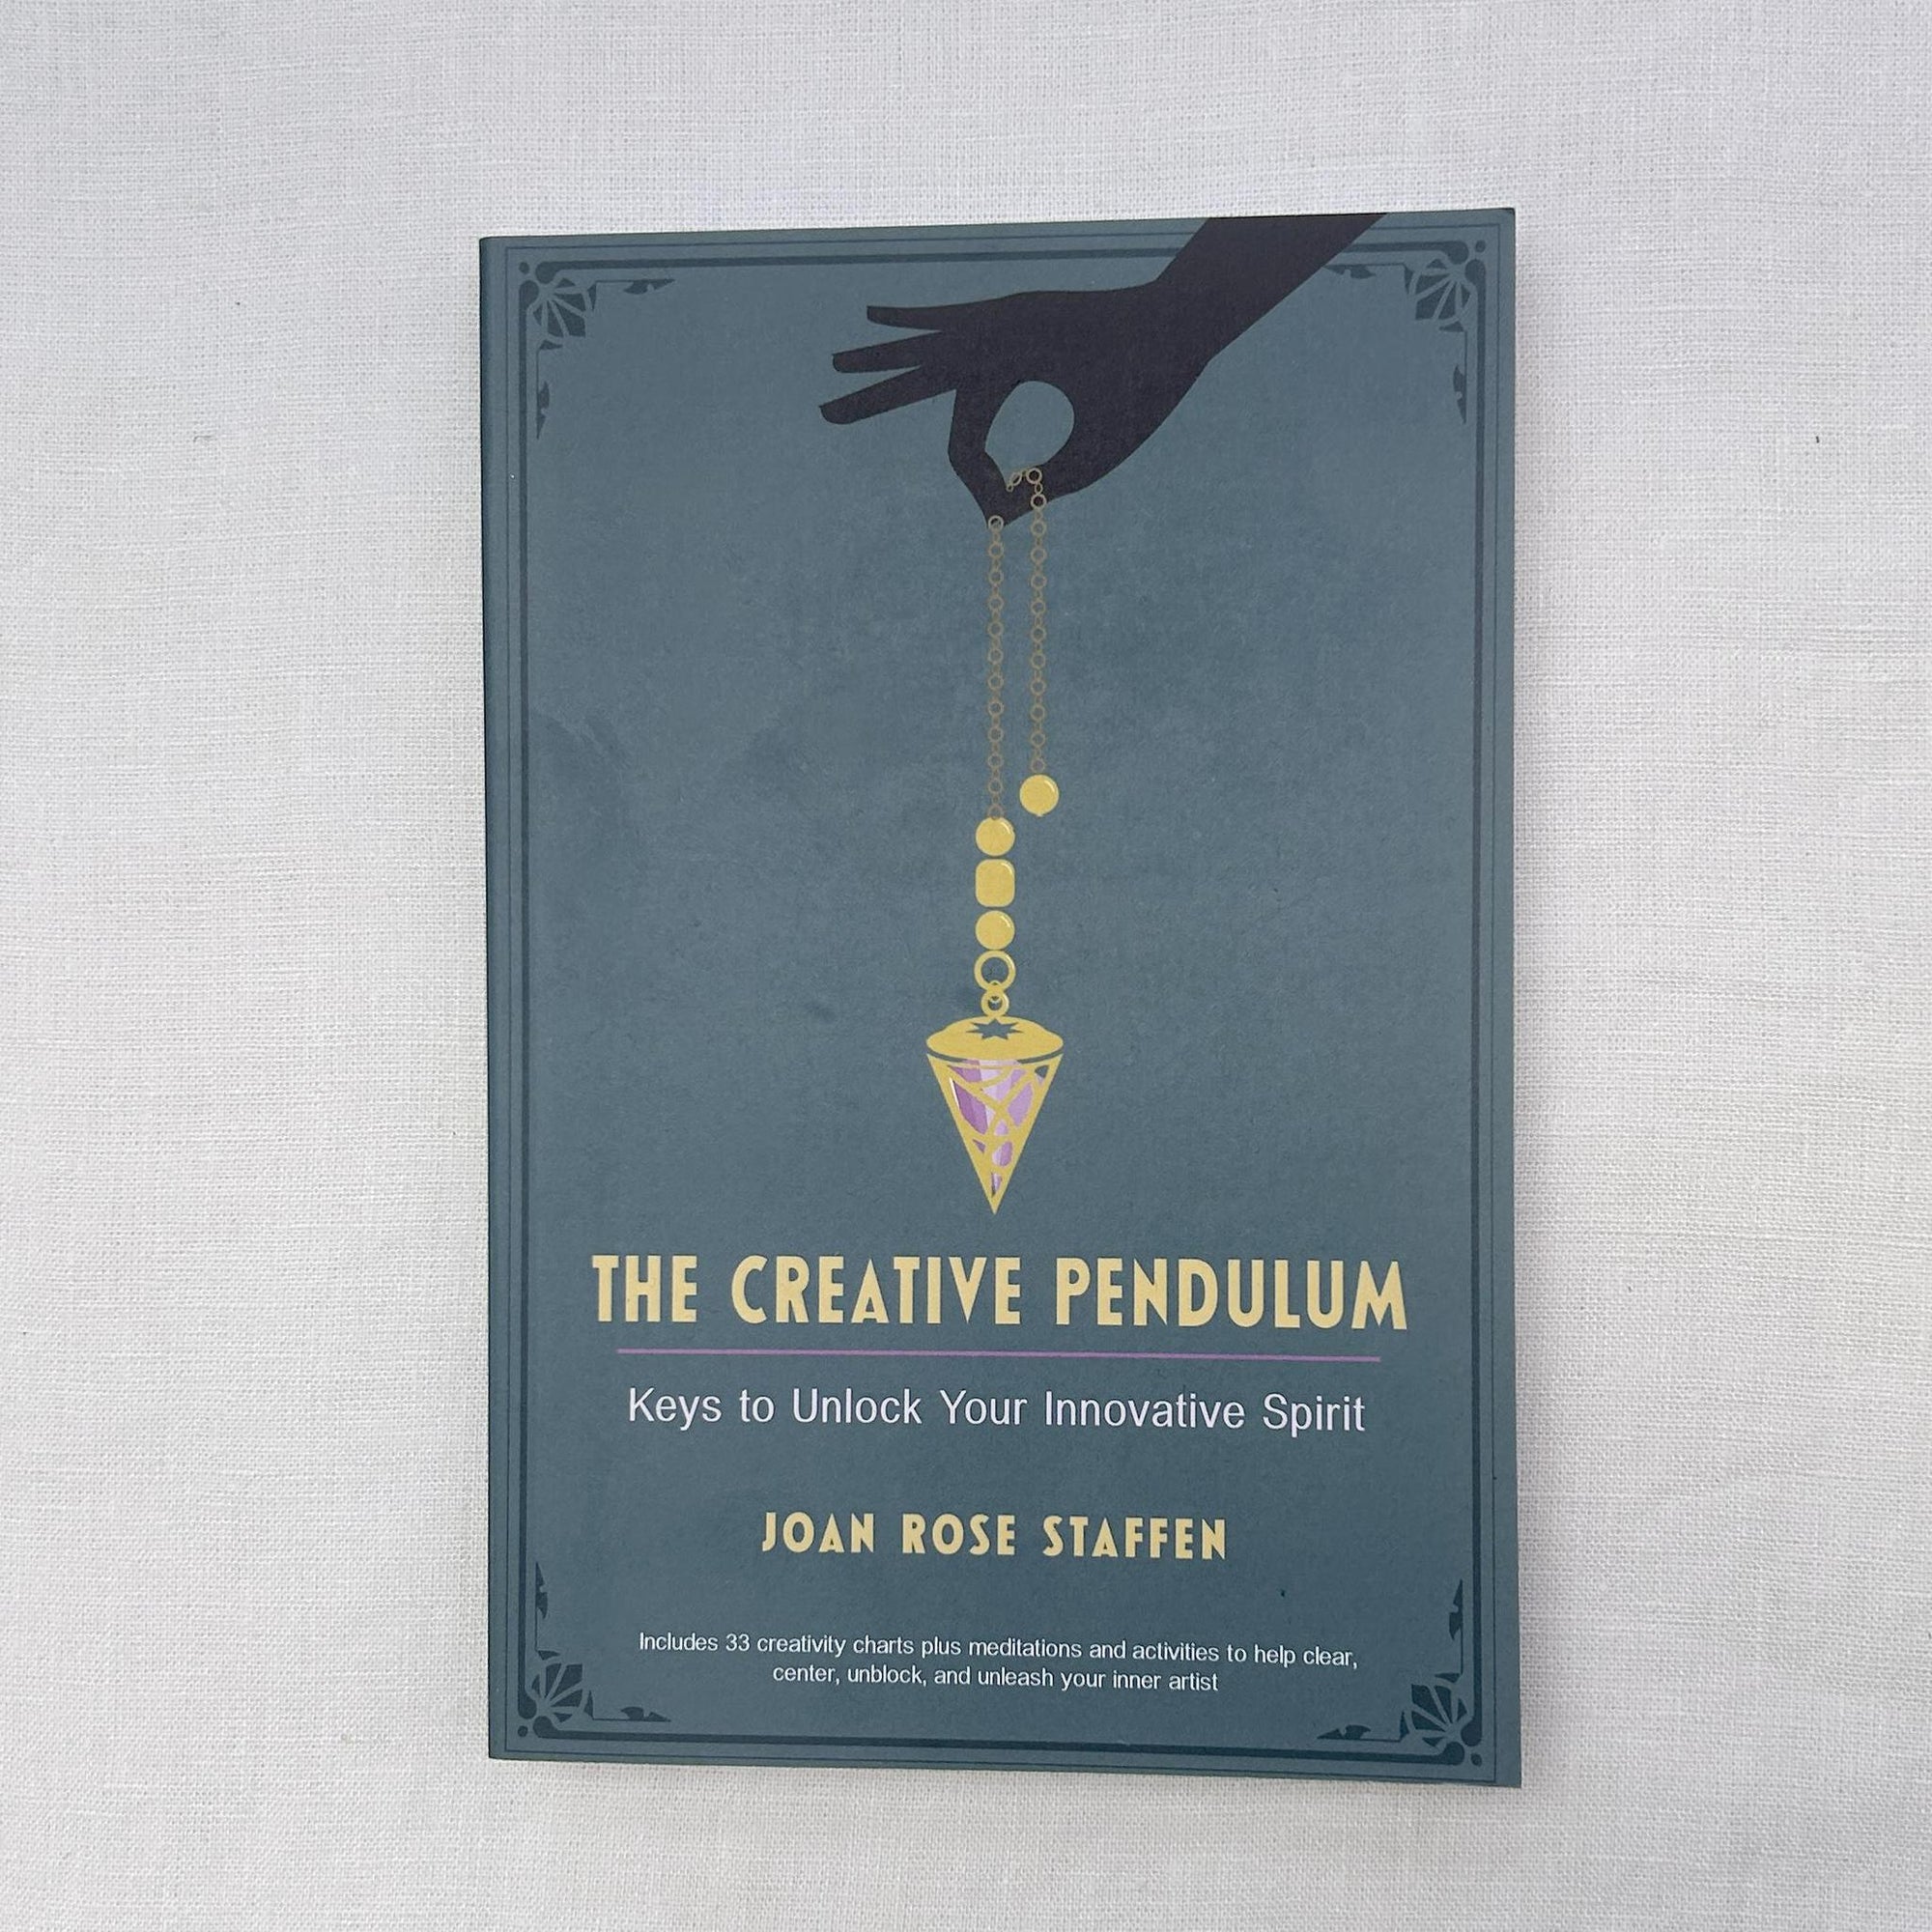 The Creative Pendulum Book: keys to unlock your innovative spirit